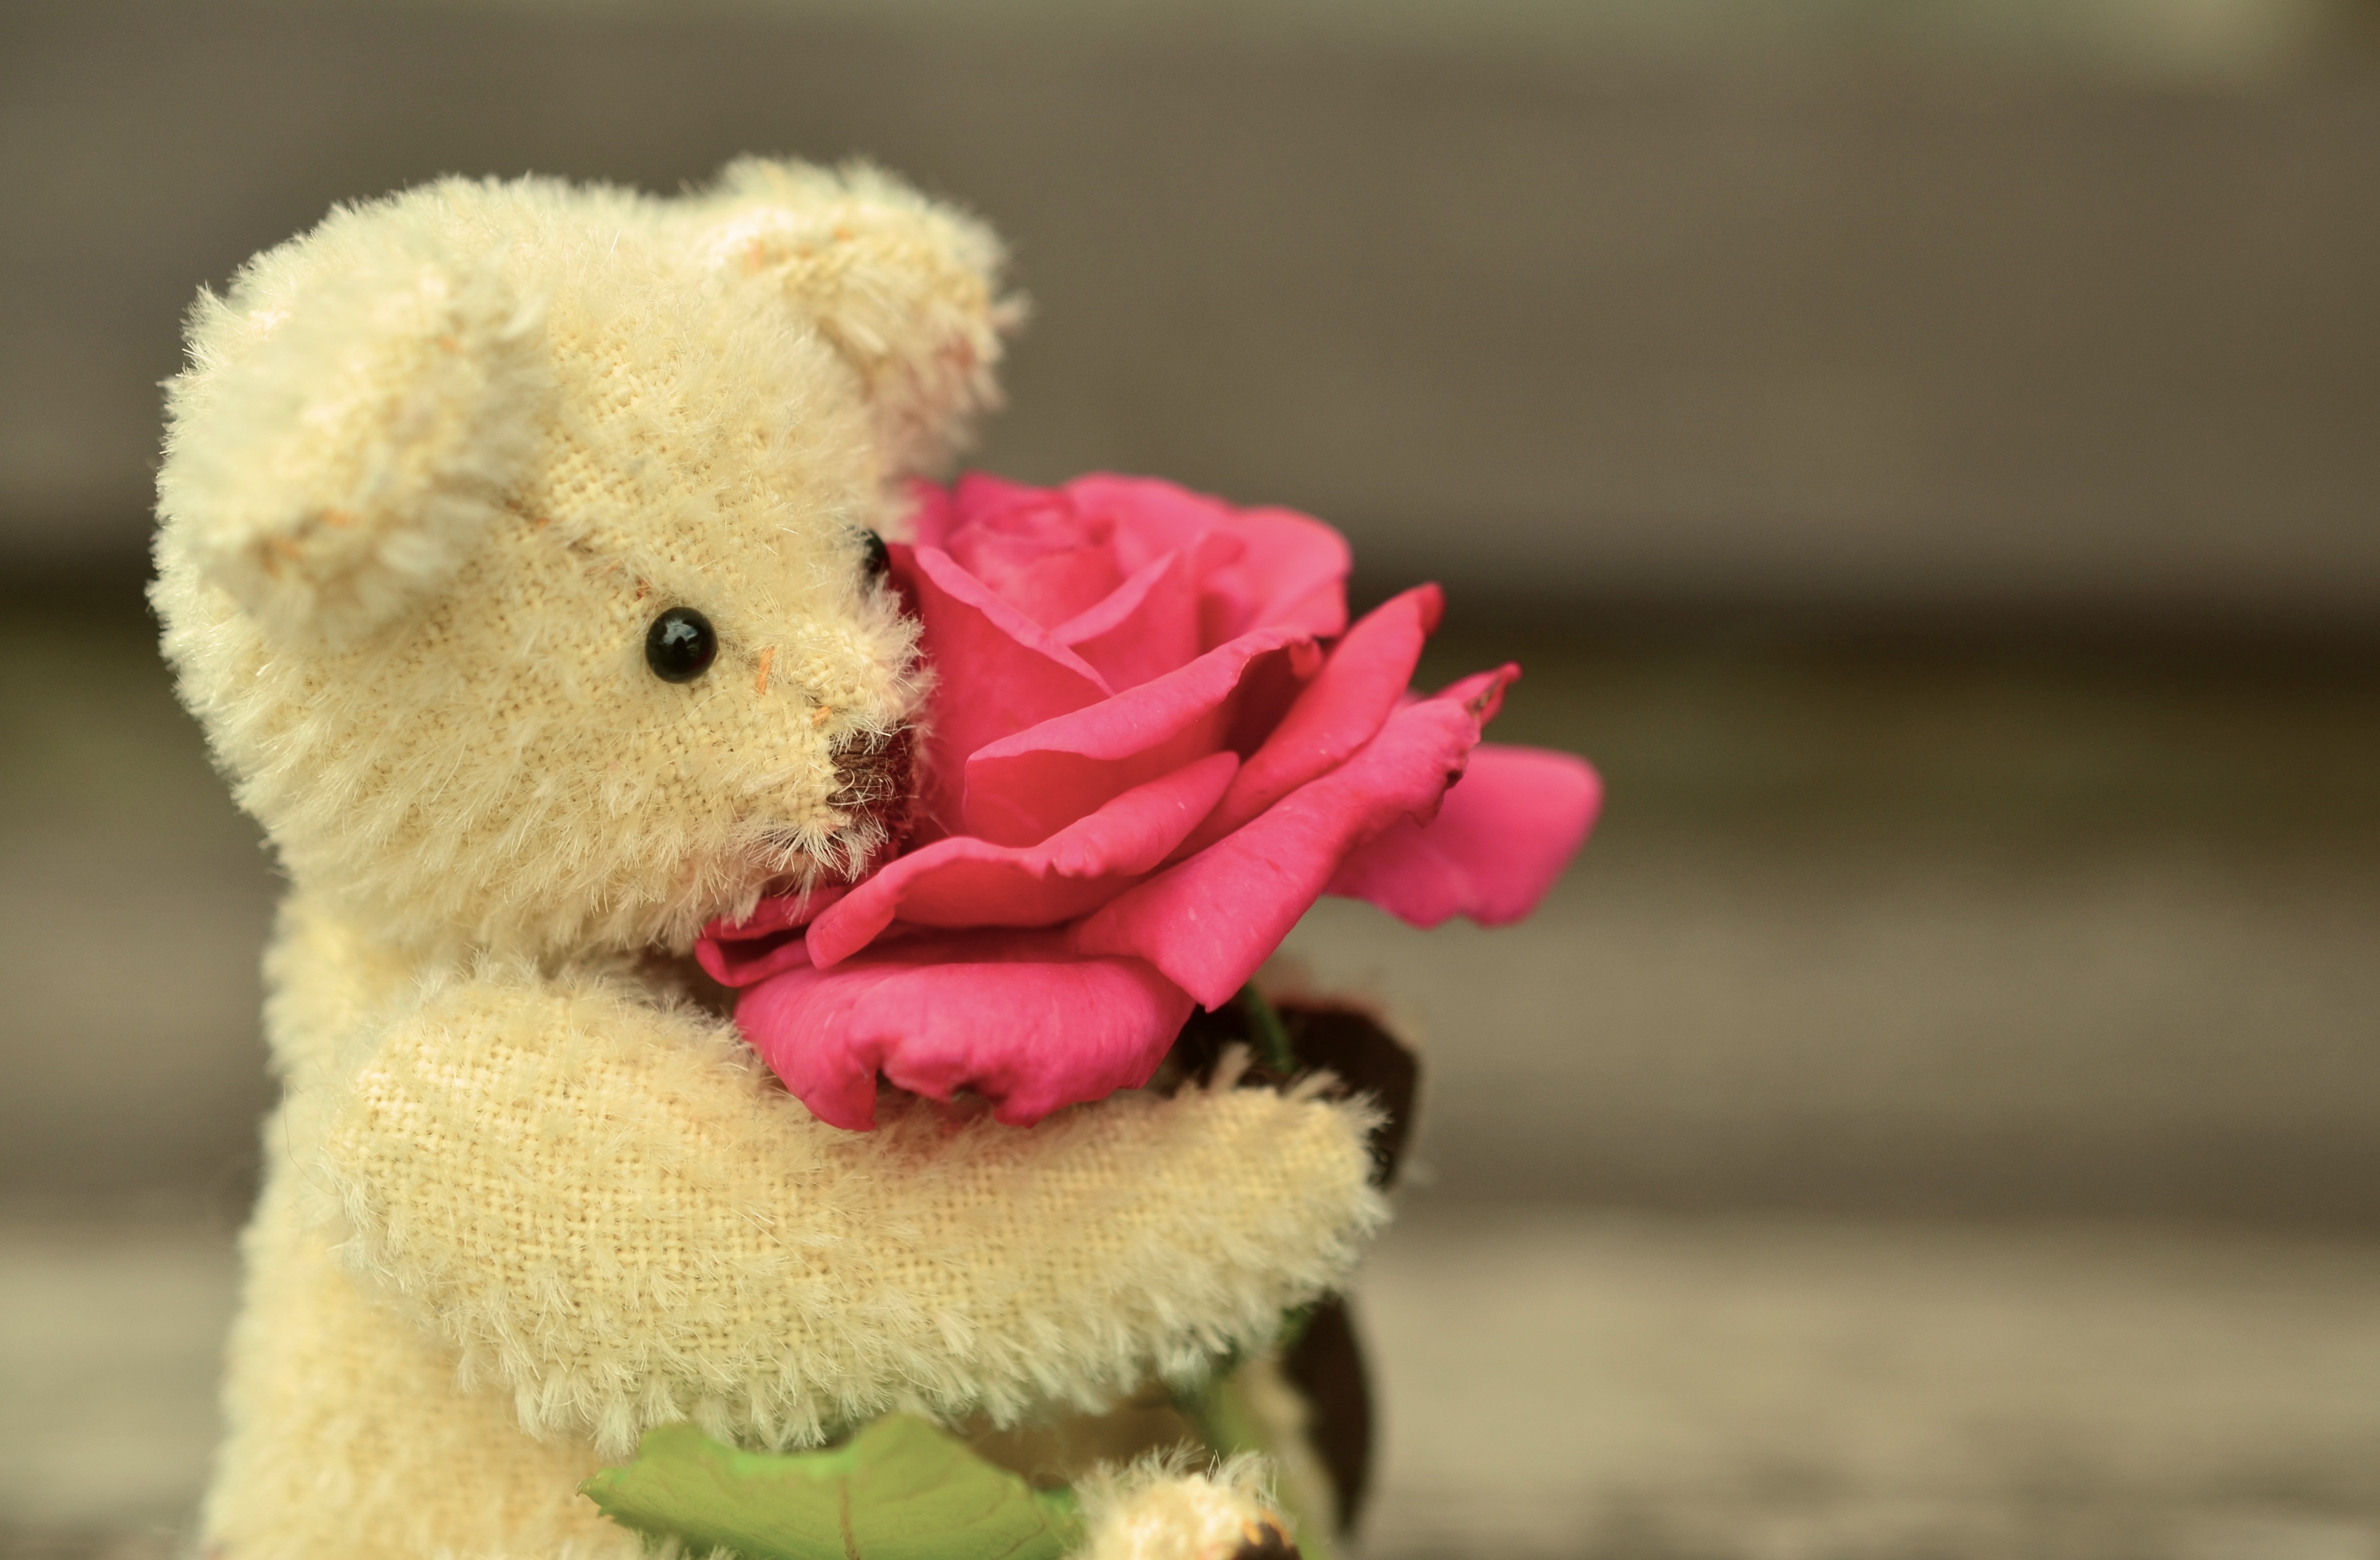 brown bear plush toy and pink rose